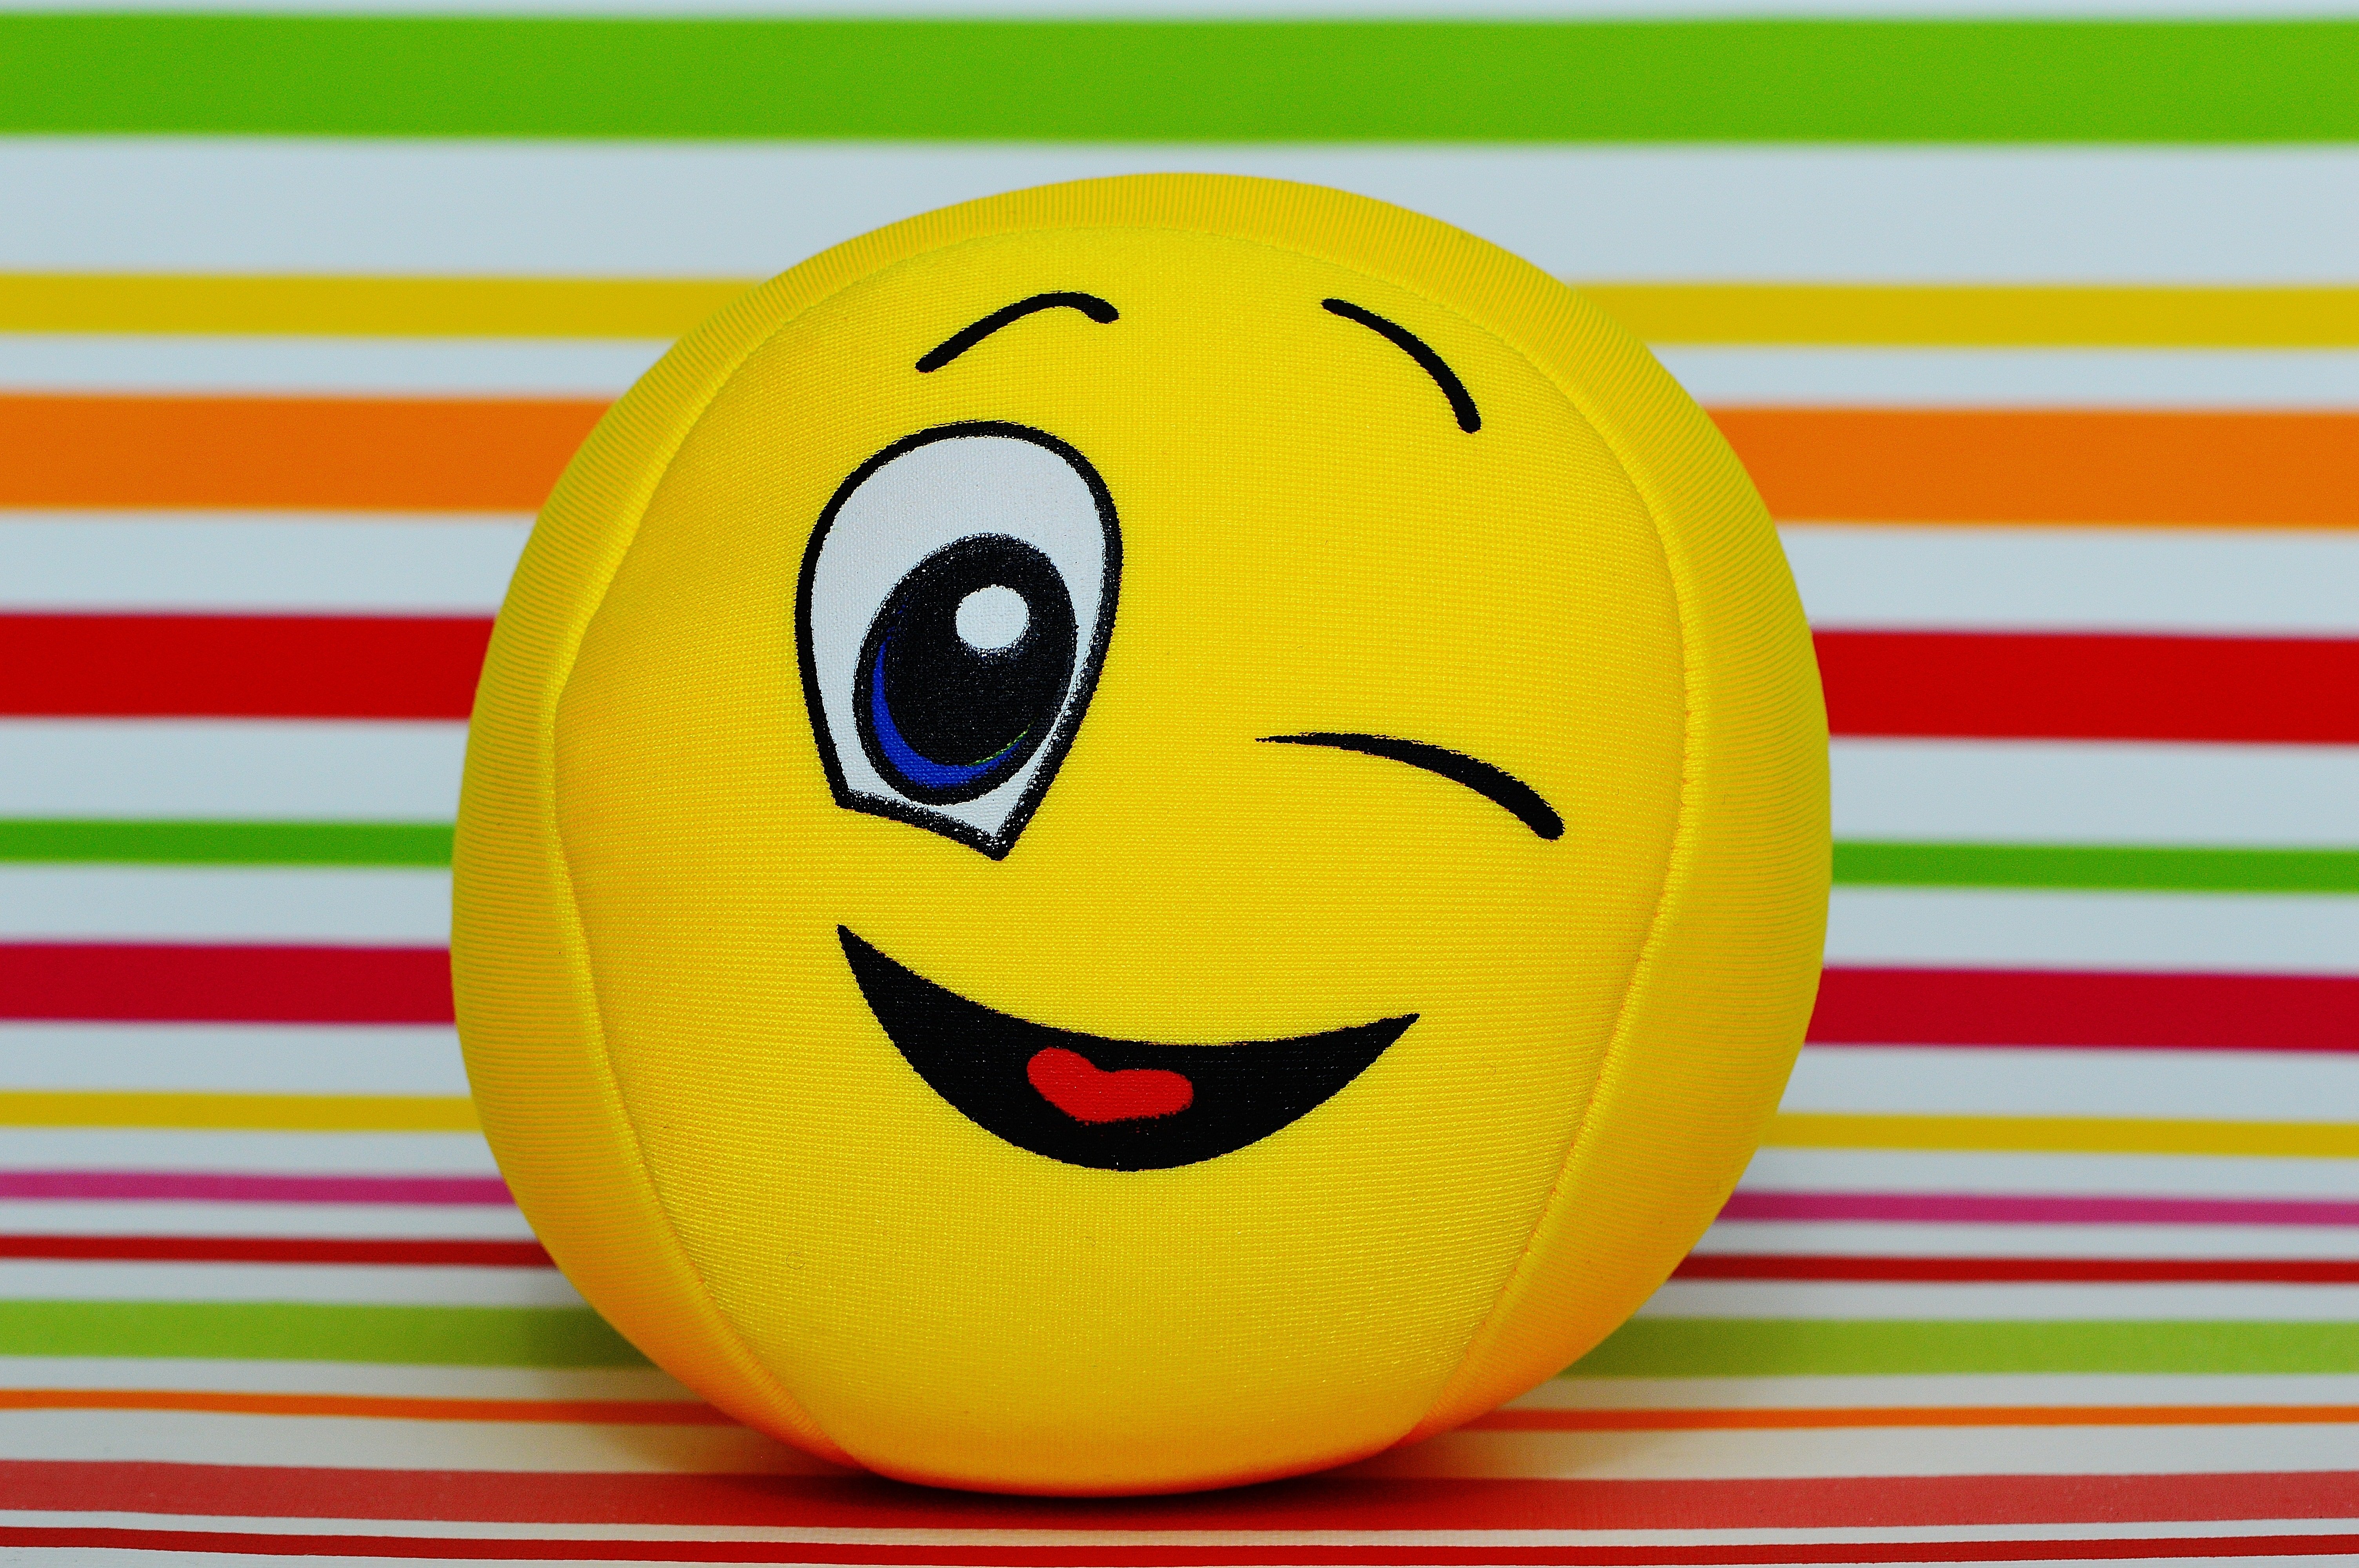 Winking Smiley Ball Plush Toy On Concrete Pavement